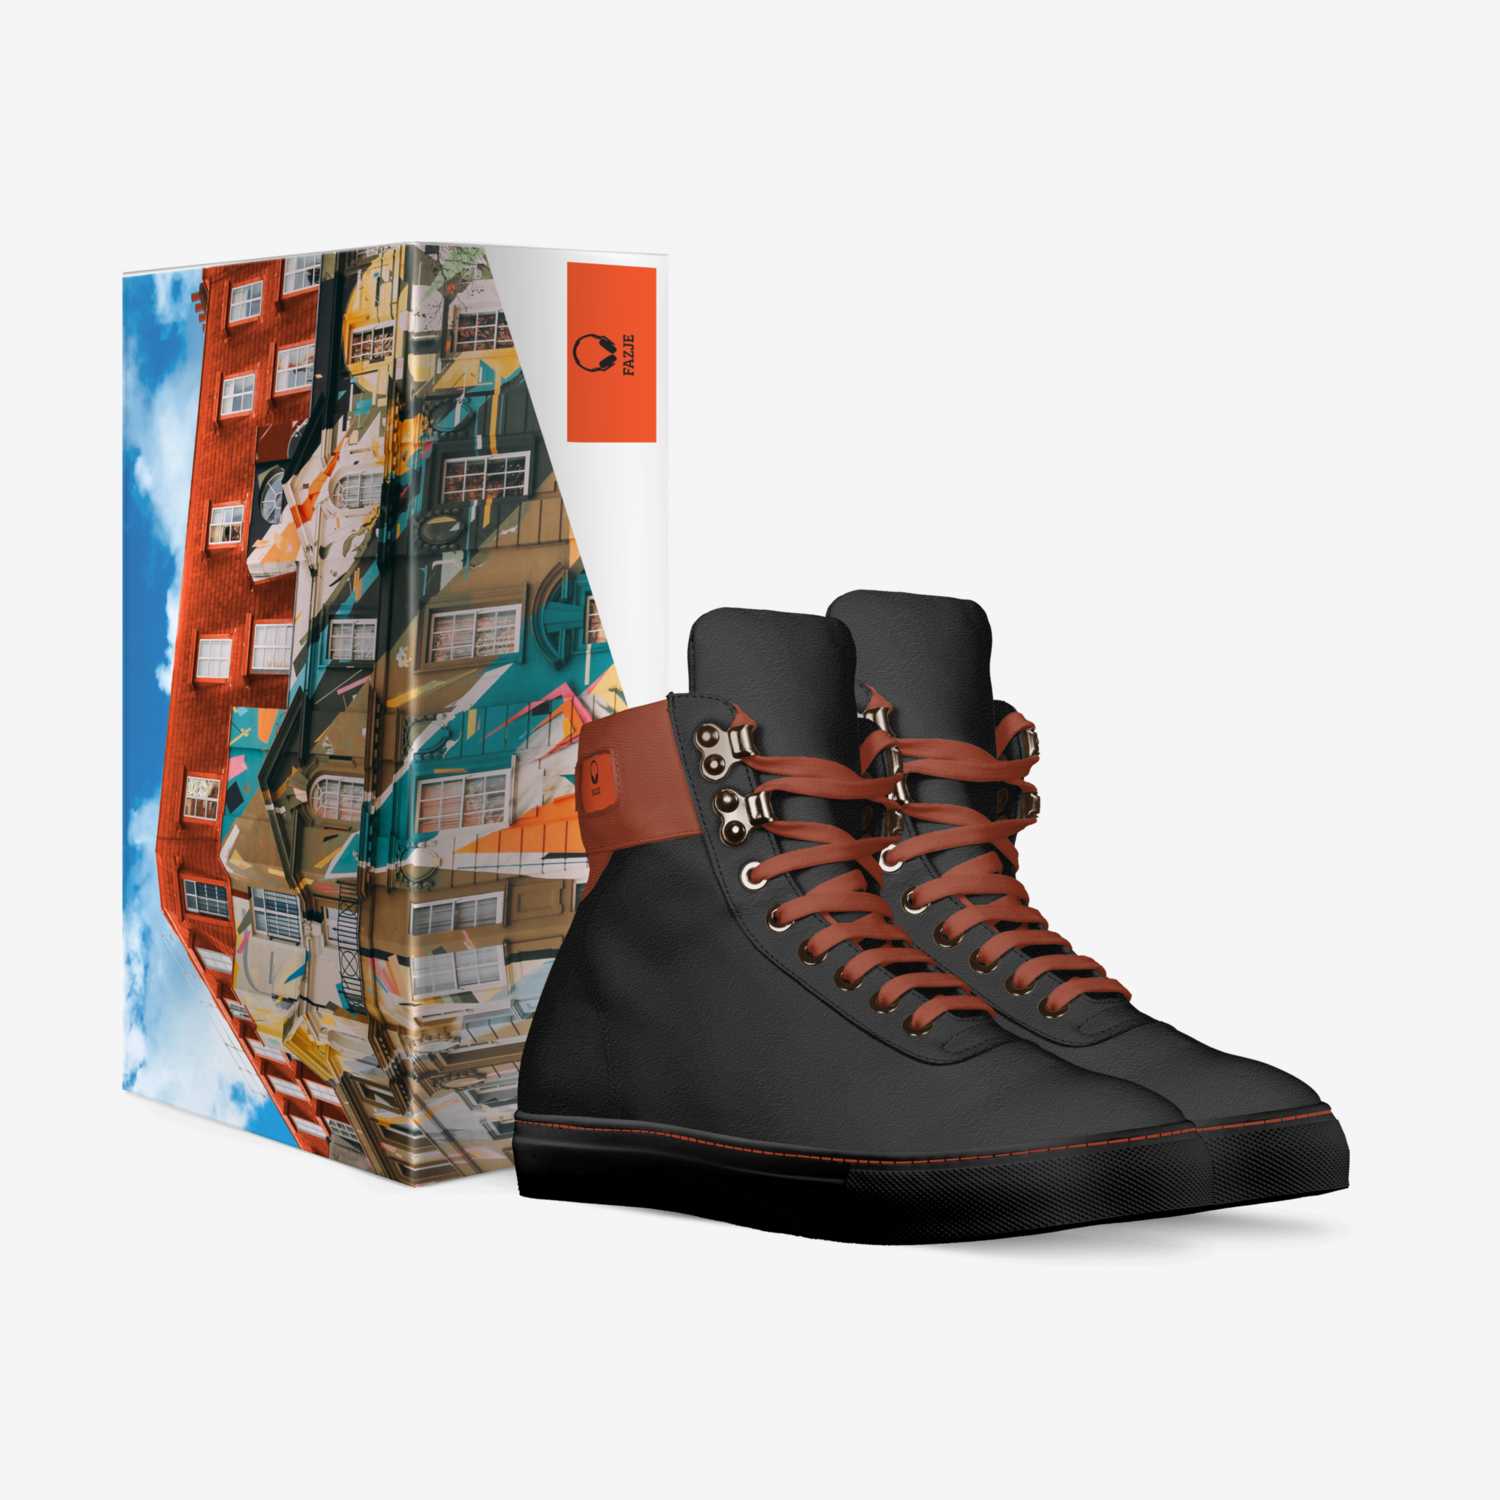 Fazje custom made in Italy shoes by Faz Rahmon | Box view